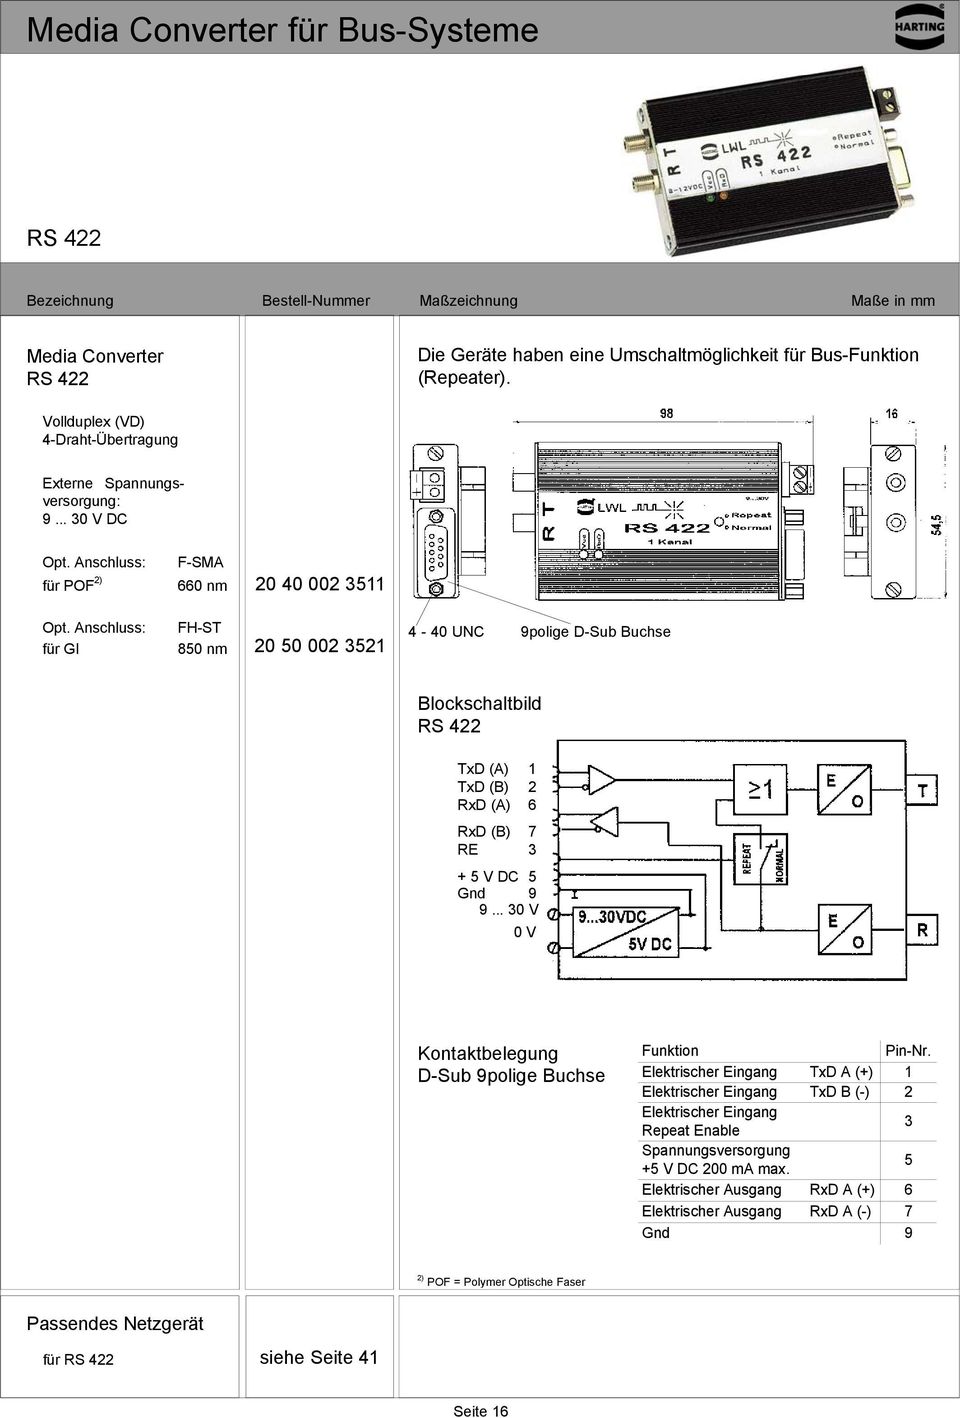 Anschluss: für GI FH-ST 850 nm 20 50 002 3521 4-40 UNC 9polige D-Sub Buchse Blockschaltbild RS 422 TxD (A) 1 TxD (B) 2 RxD (A) 6 RxD (B) 7 RE 3 + 5 V DC 5 Gnd 9. 9... 30 V.